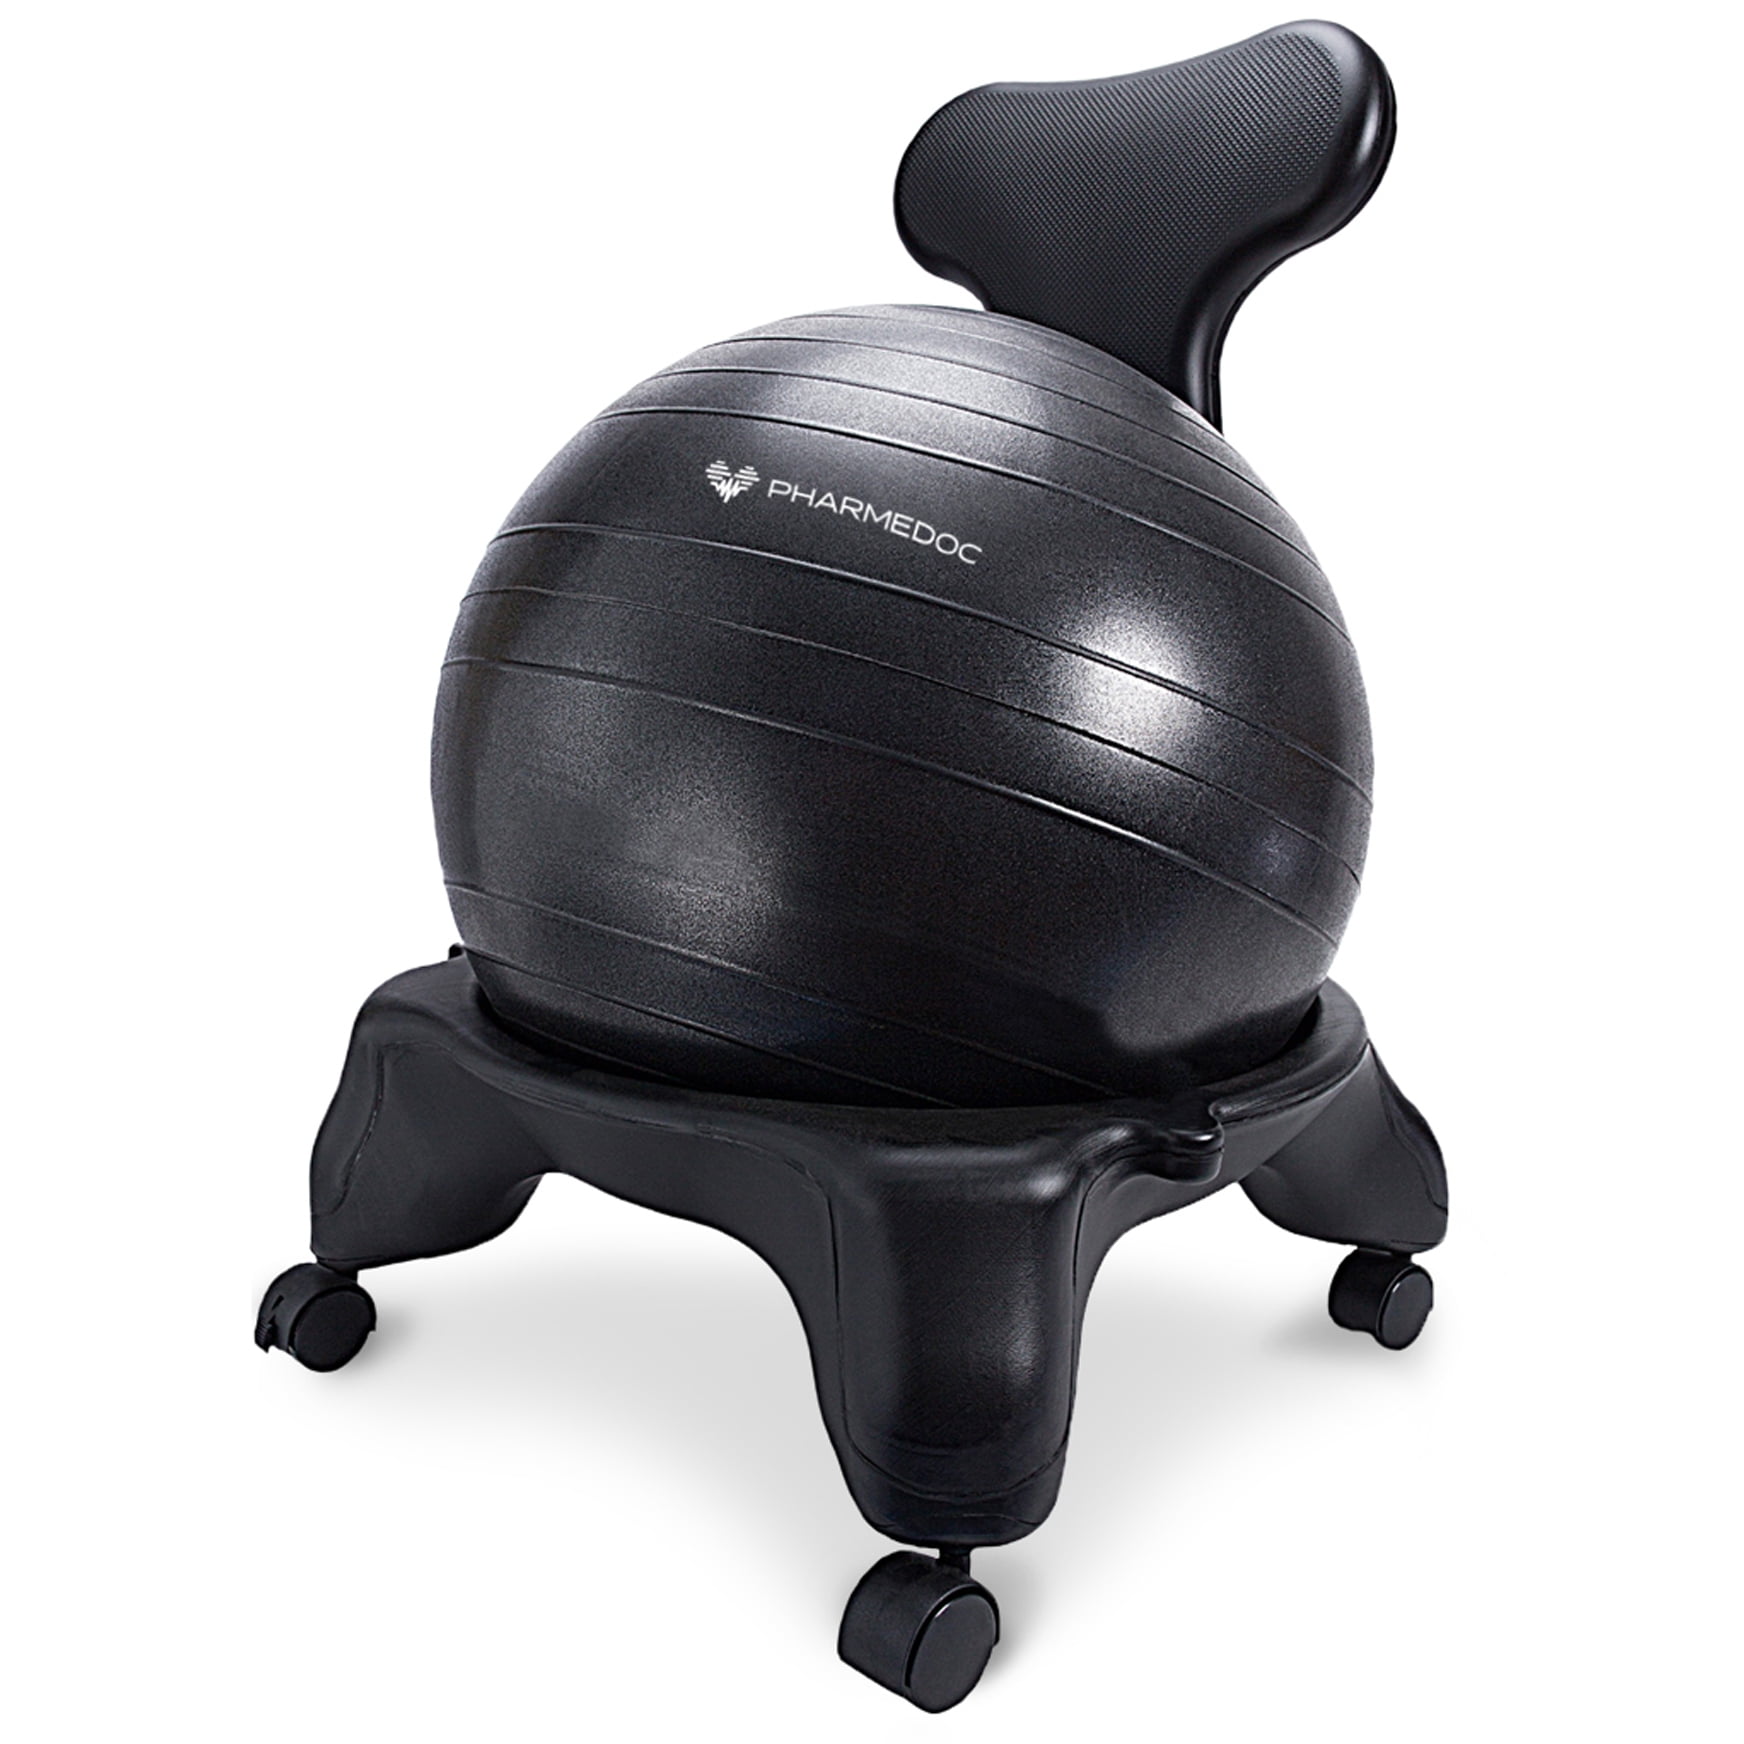 Pharmedoc Exercise Balance Ball Chair, Stability Ball For Desk Chair